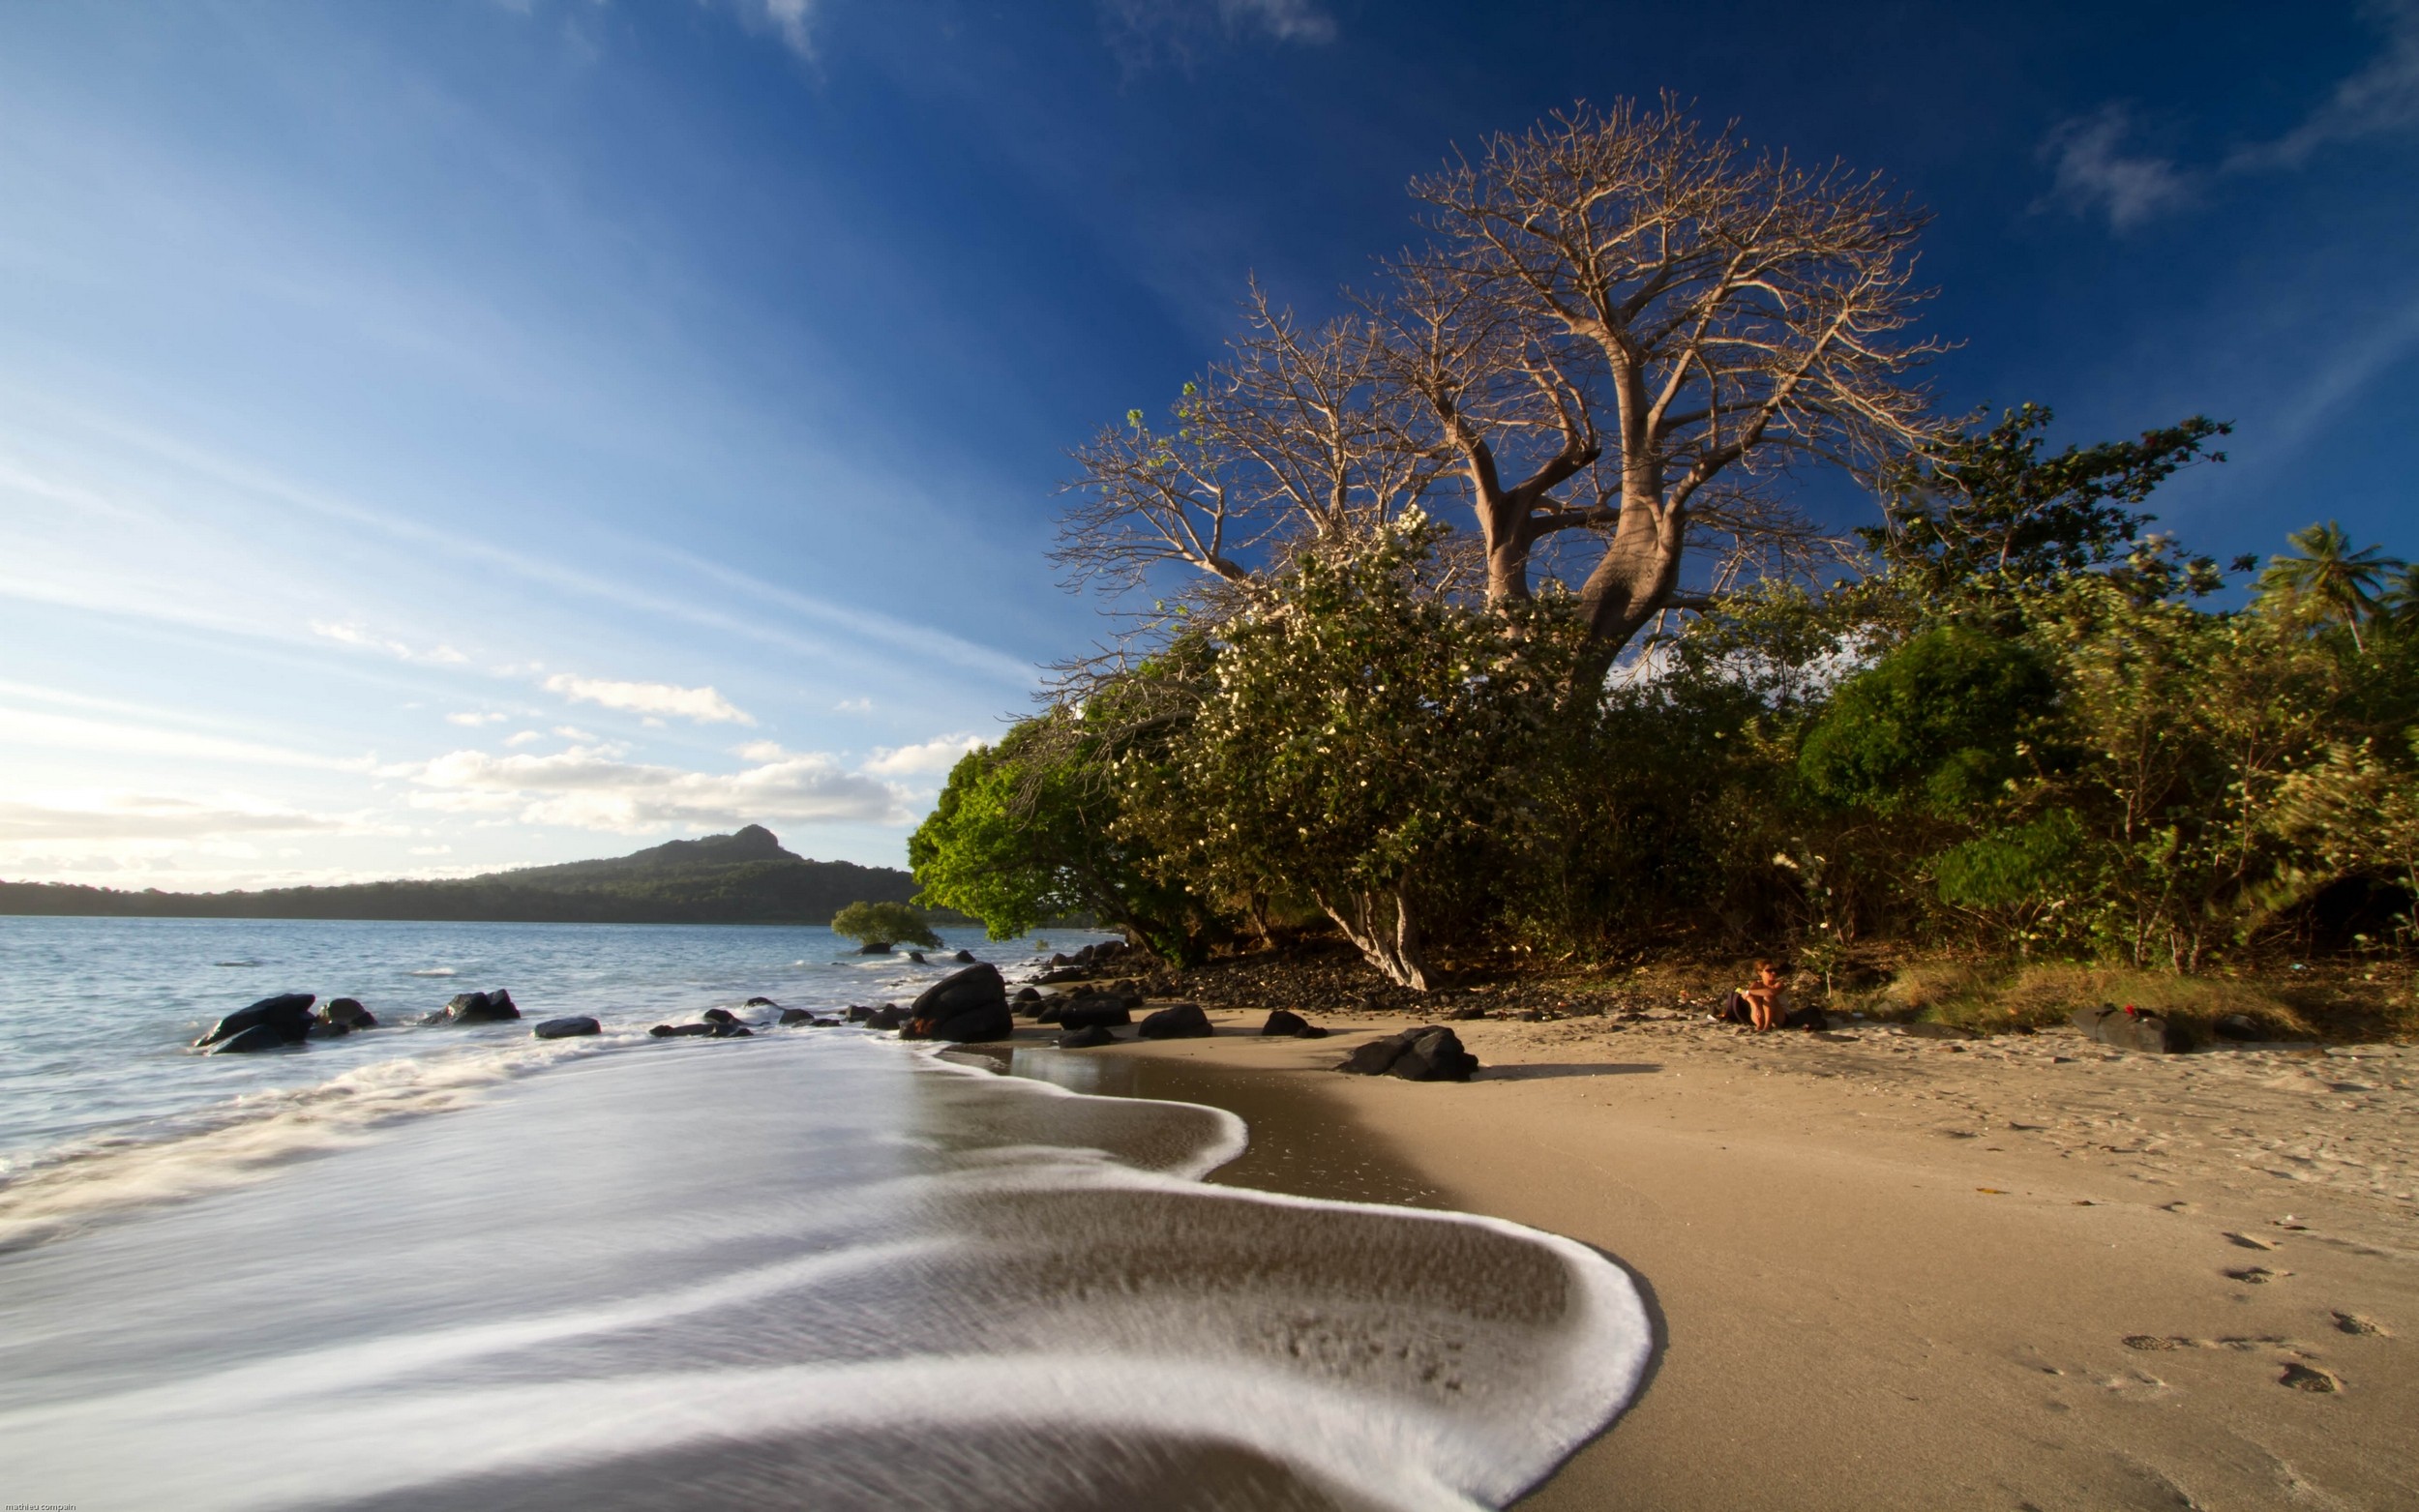 General 2500x1563 nature landscape beach sea sand sunset trees shrubs island